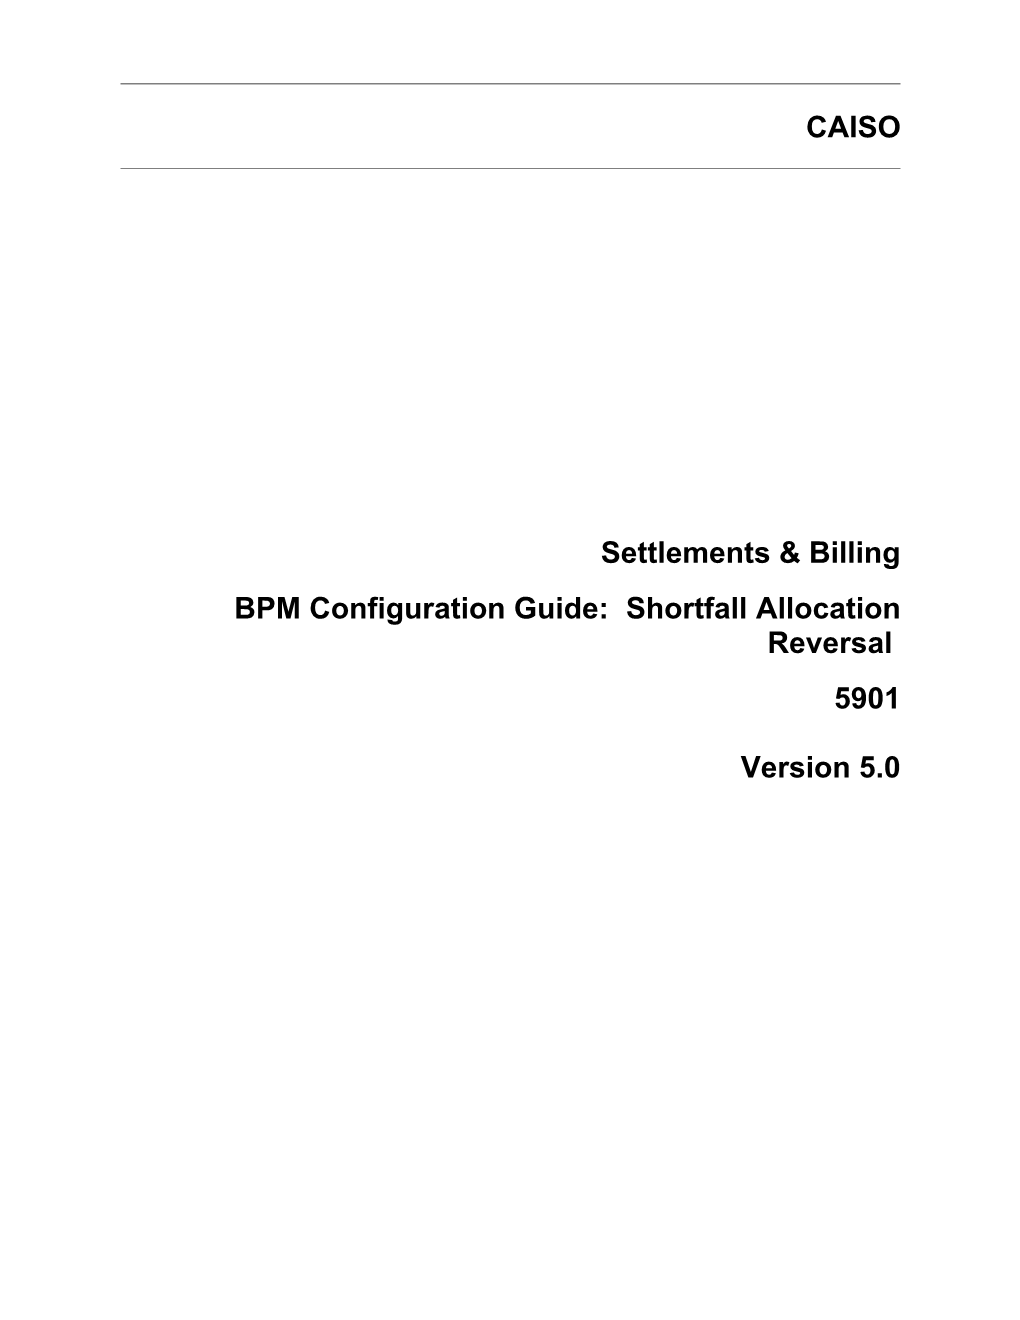 BPM Configuration Guide: Shortfall Allocation Reversal